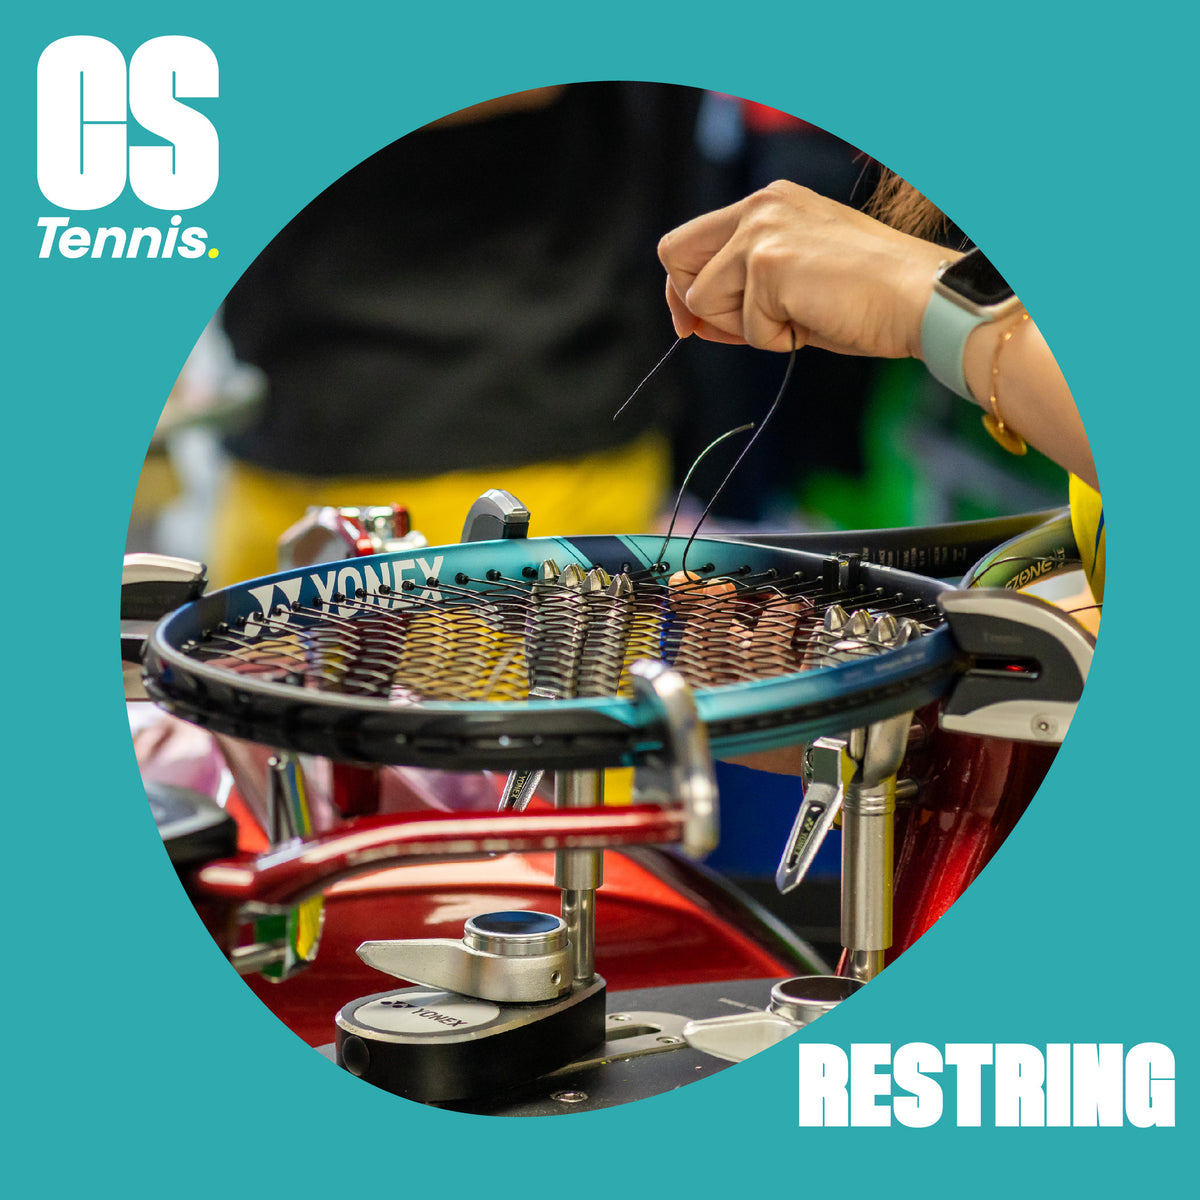 Professional Tennis Hybrid Restring